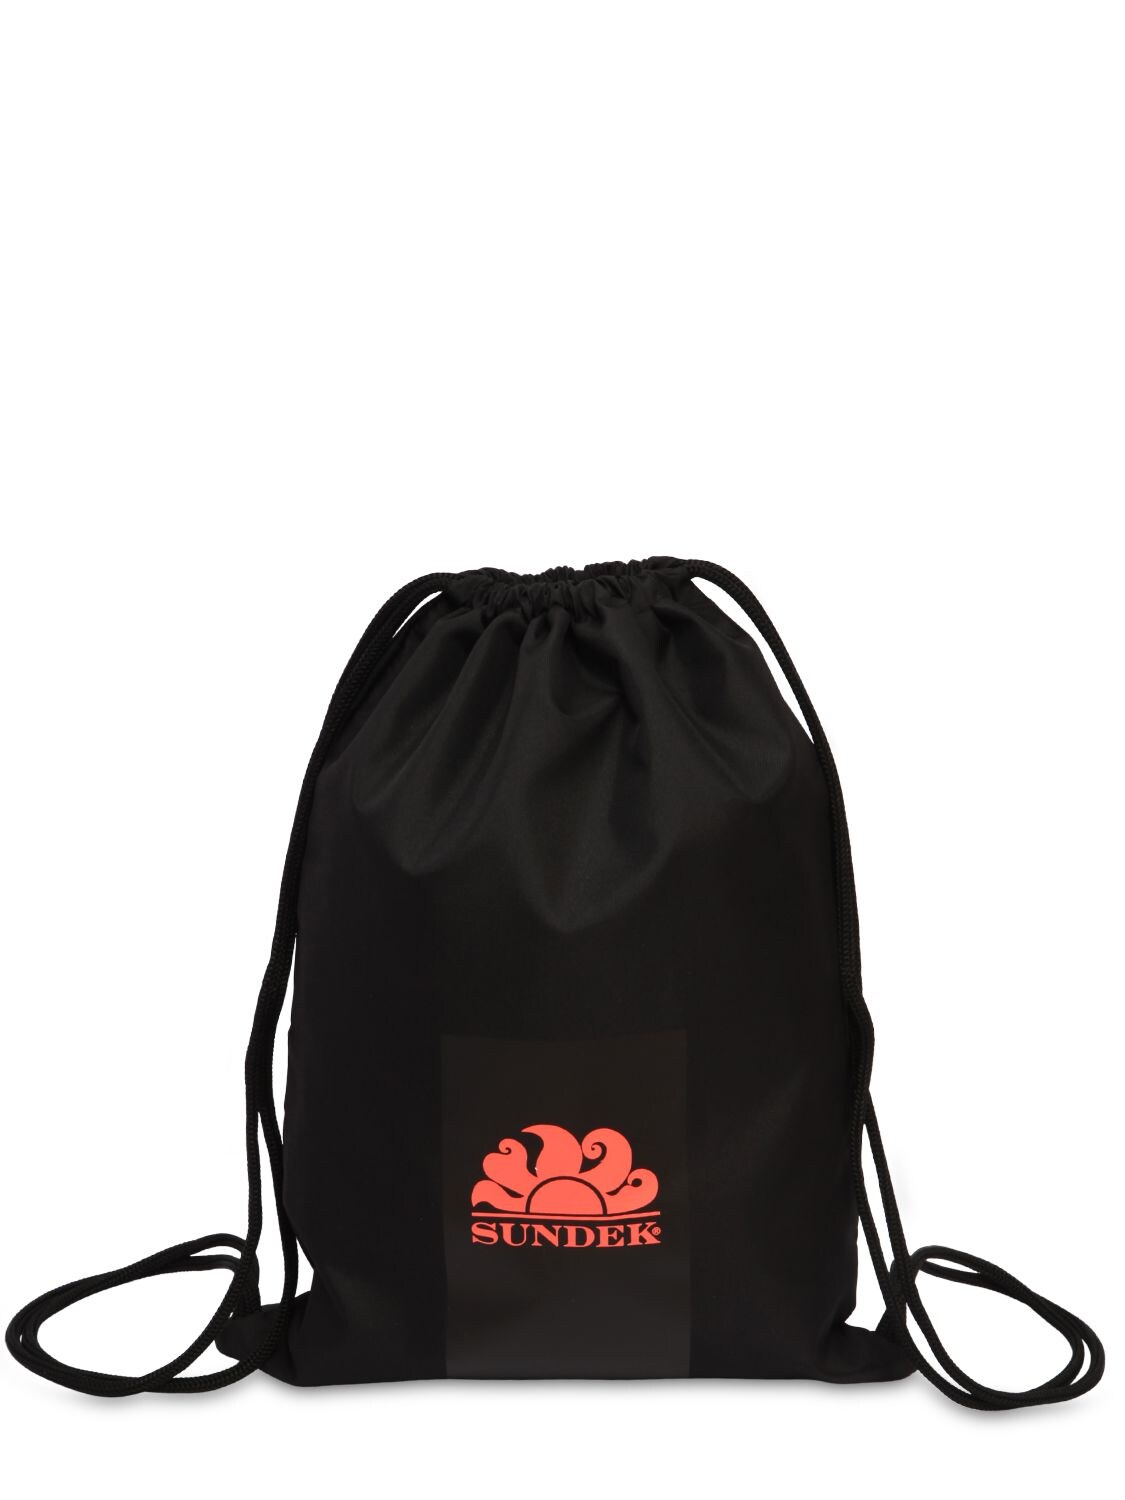 Sundek Logo Printed Canvas Drawstring Backpack In Black